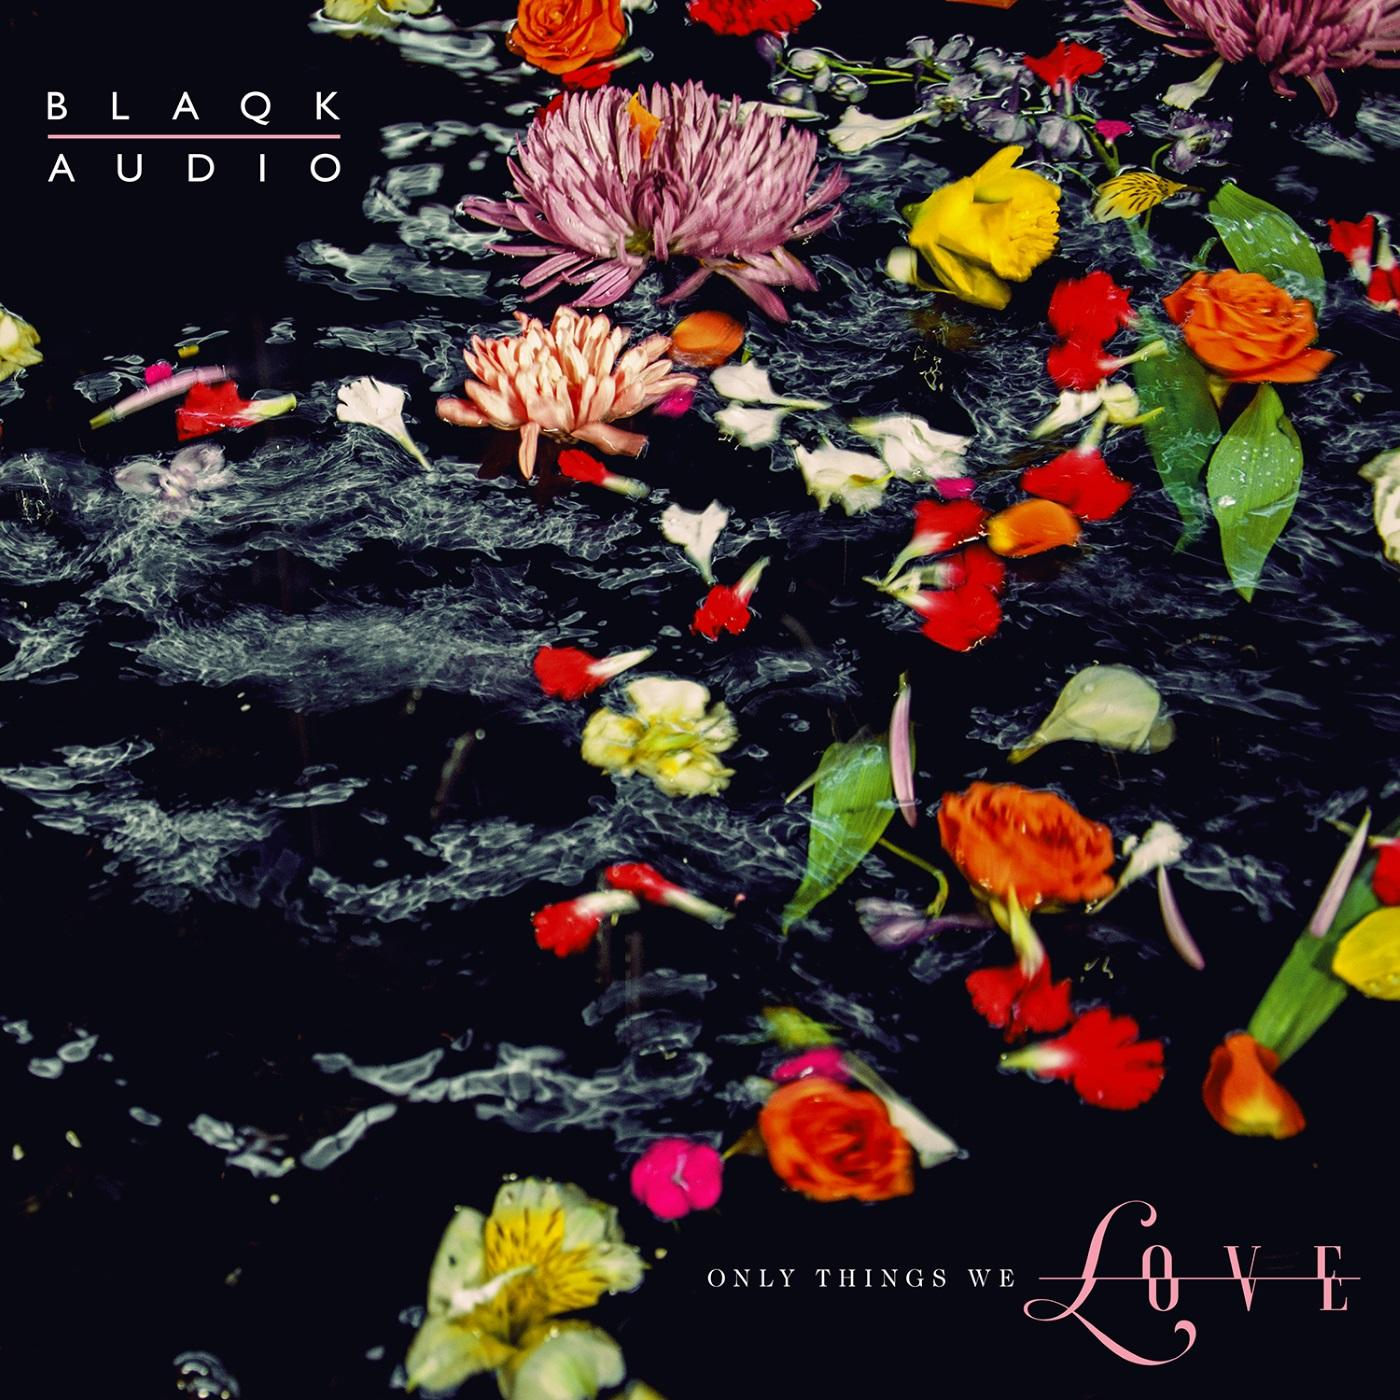 Blaqk Audio Things Love We (CD) - Only -